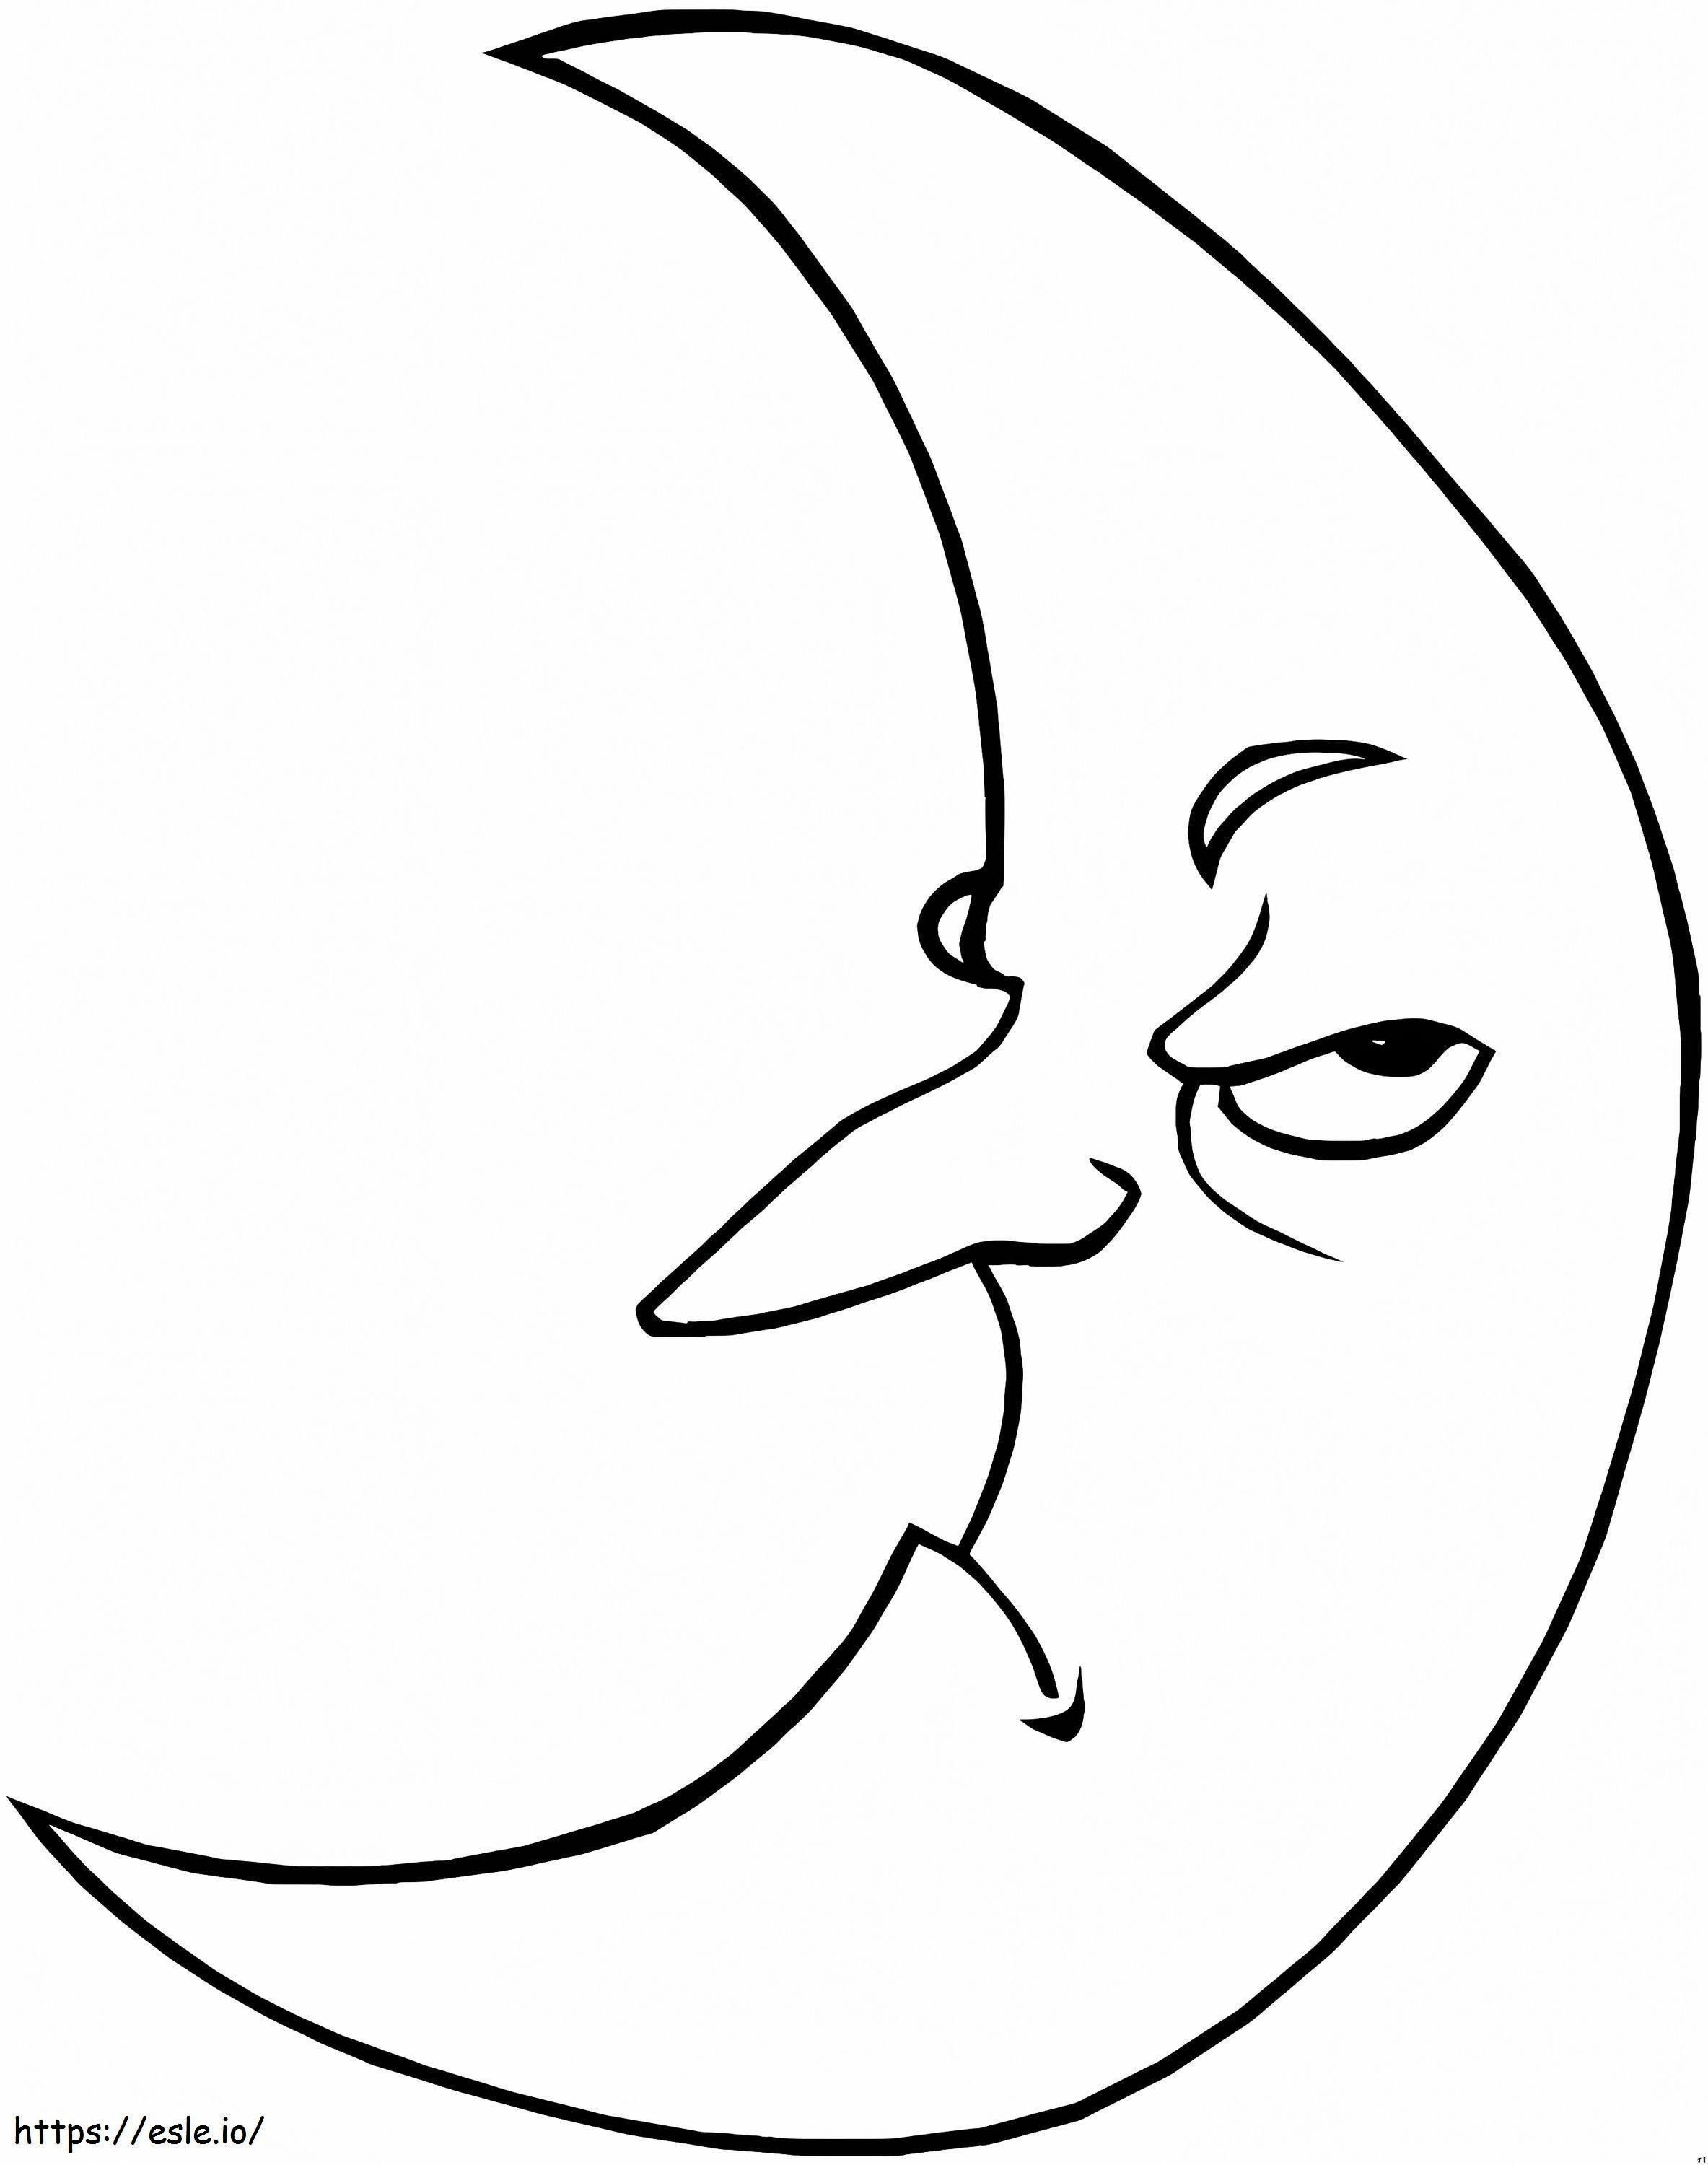 Unhappy Moon coloring page